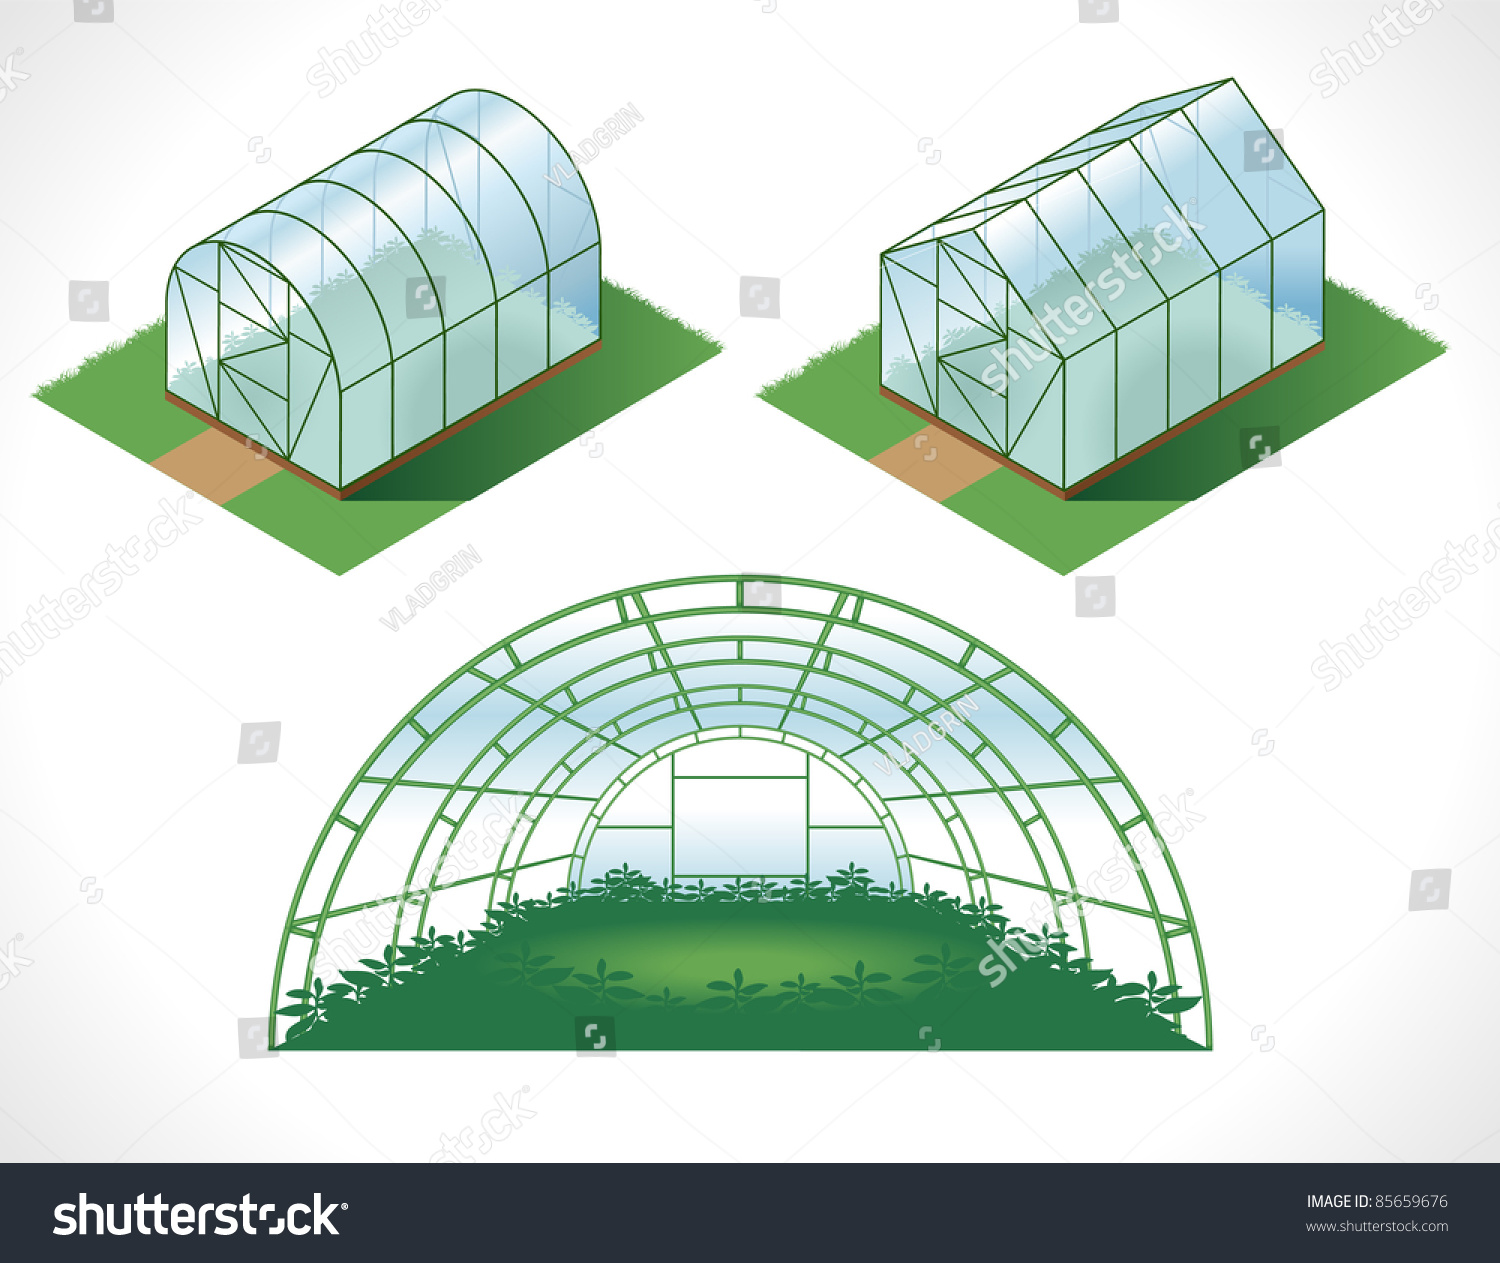 free clip art greenhouse - photo #23